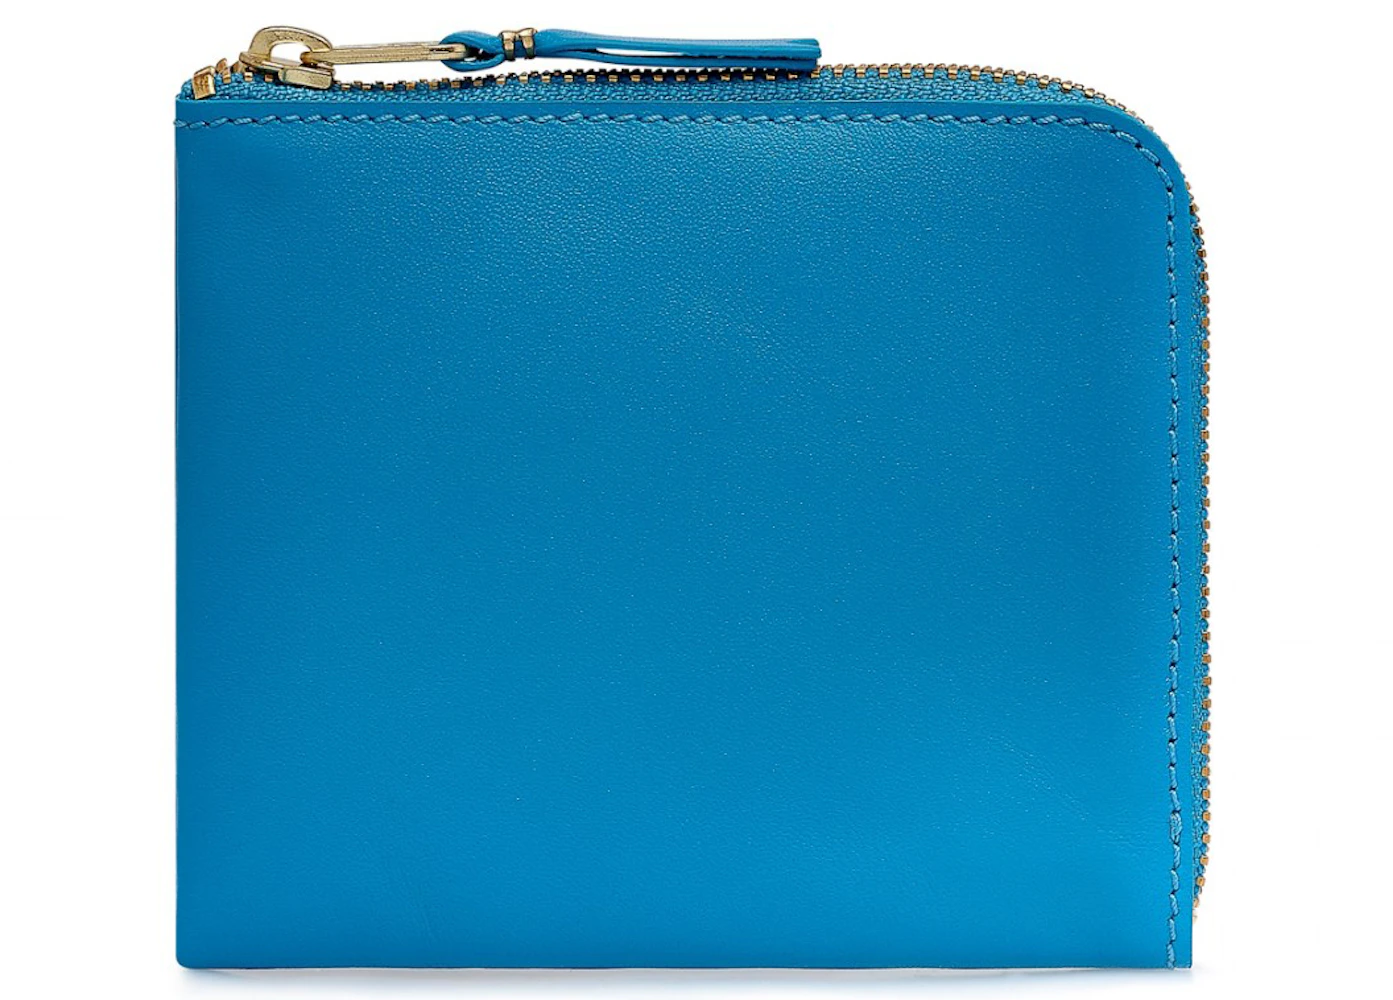 Comme des Garcons SA3100C Colour Plain Wallet Blue in Leather with Gold ...